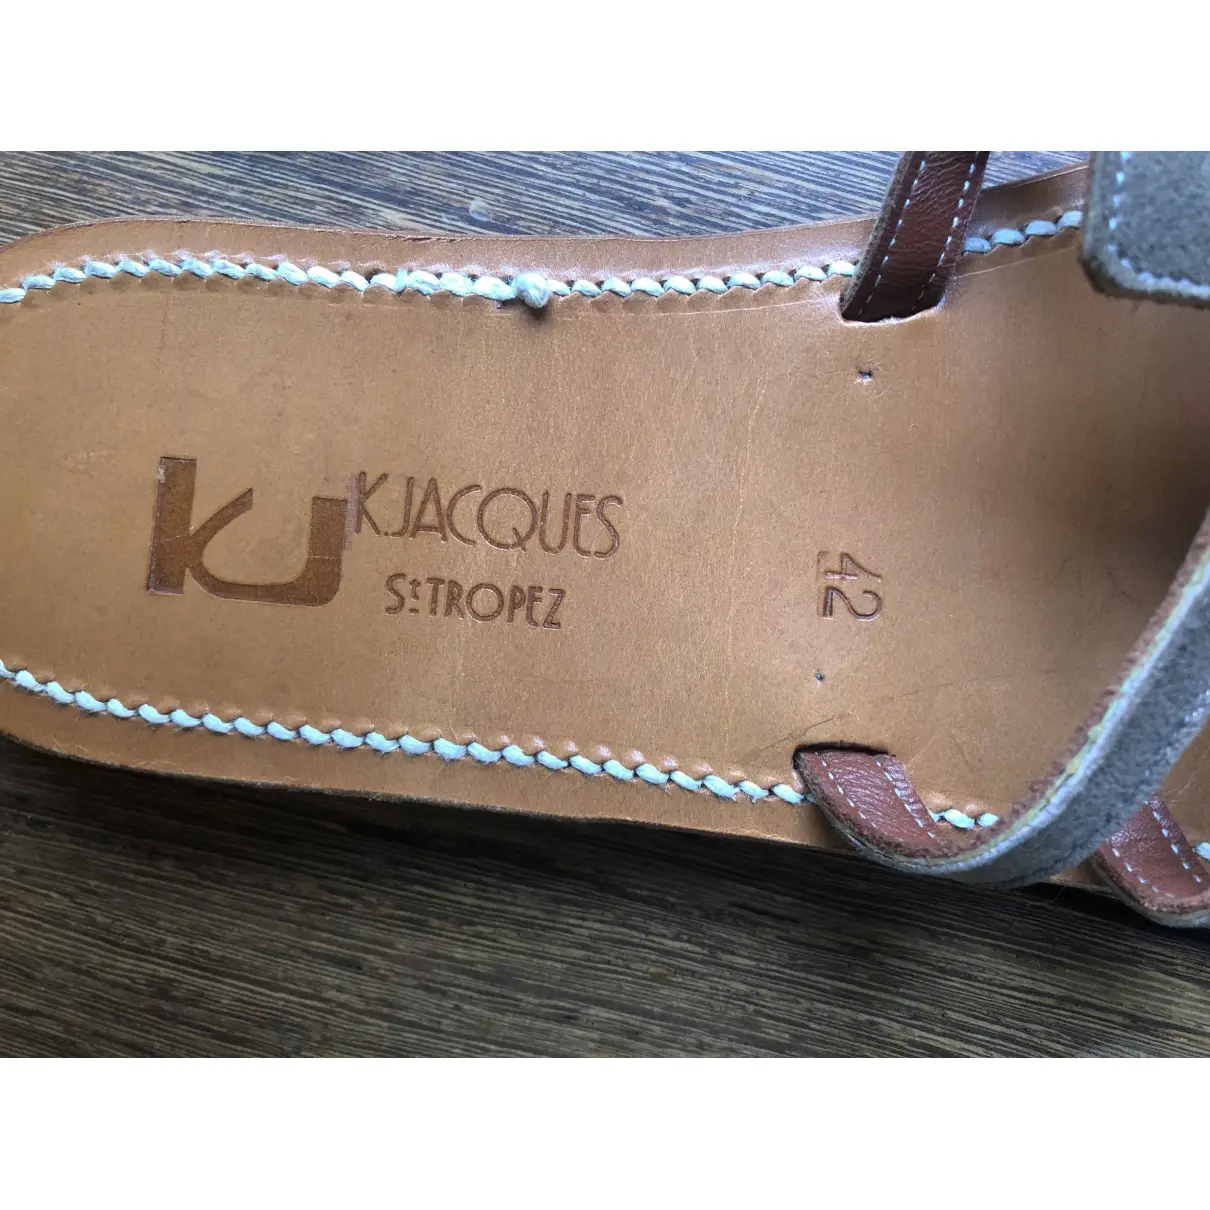 Buy K Jacques Leather sandal online